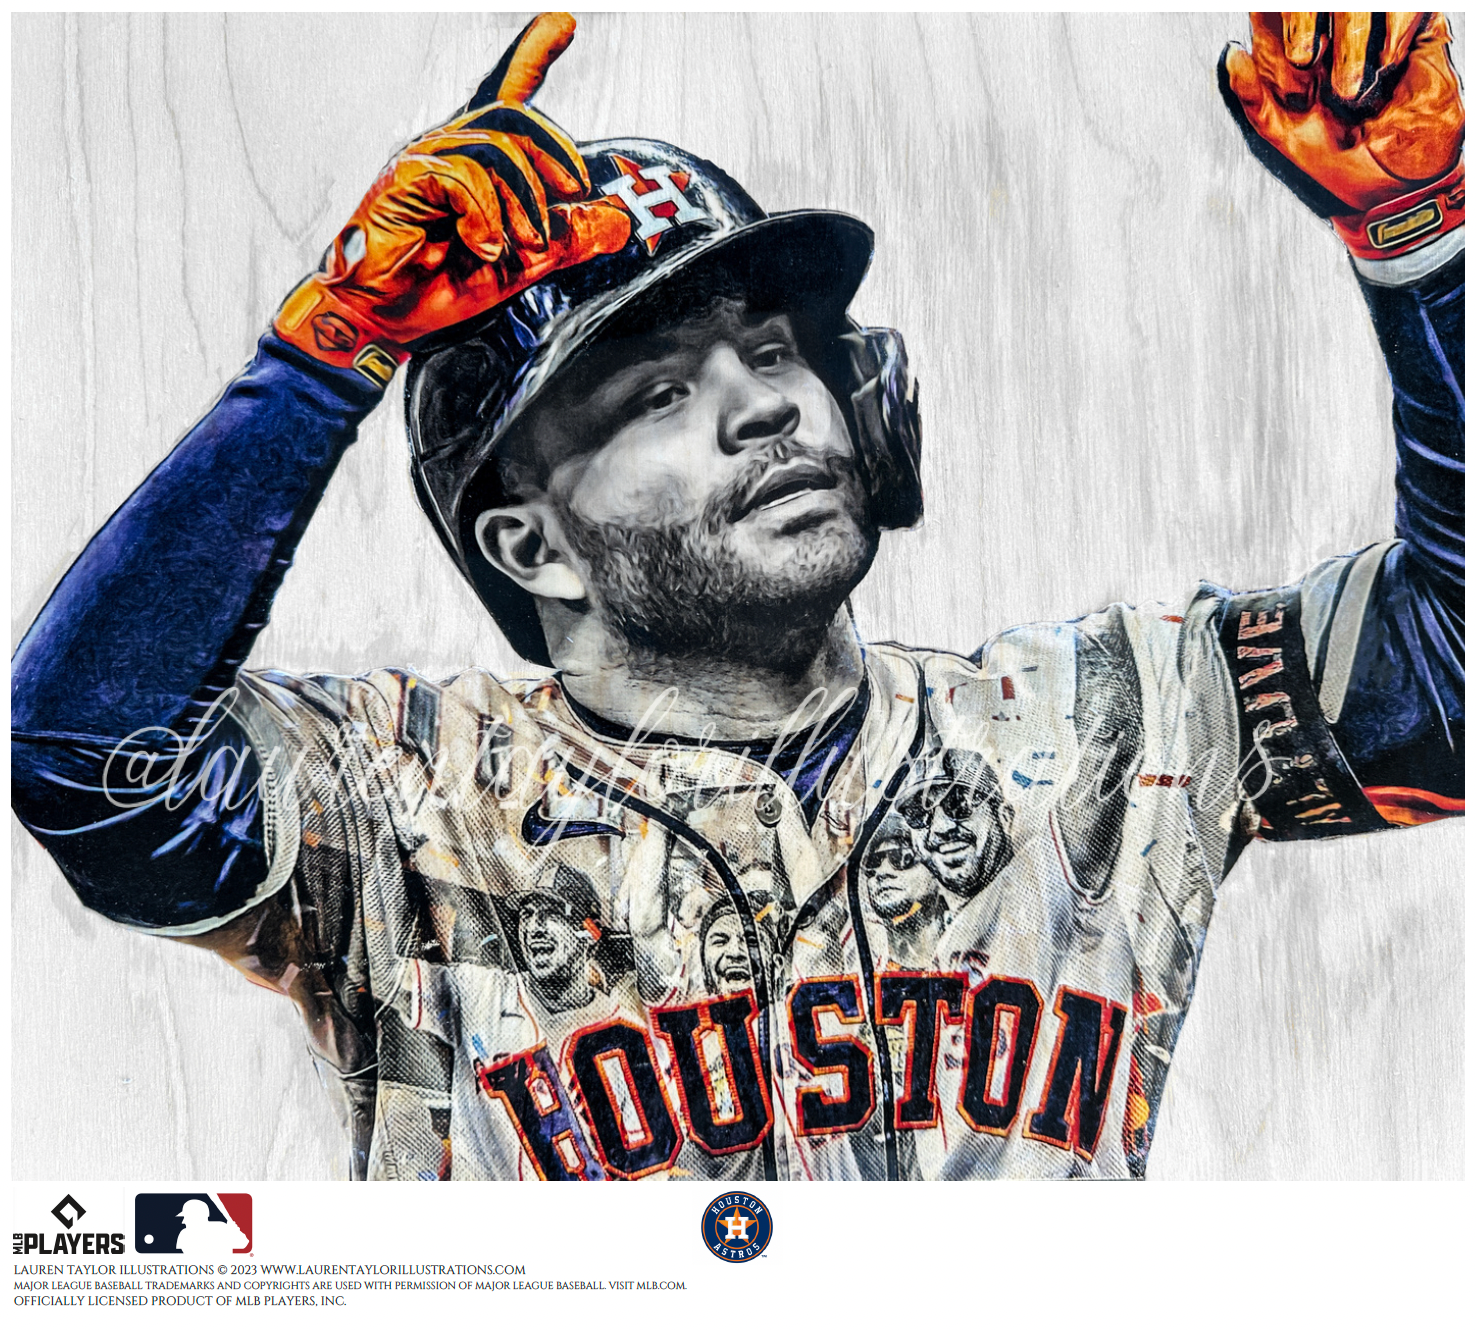  José Altuve Baseball Player Poster Artworks Picture